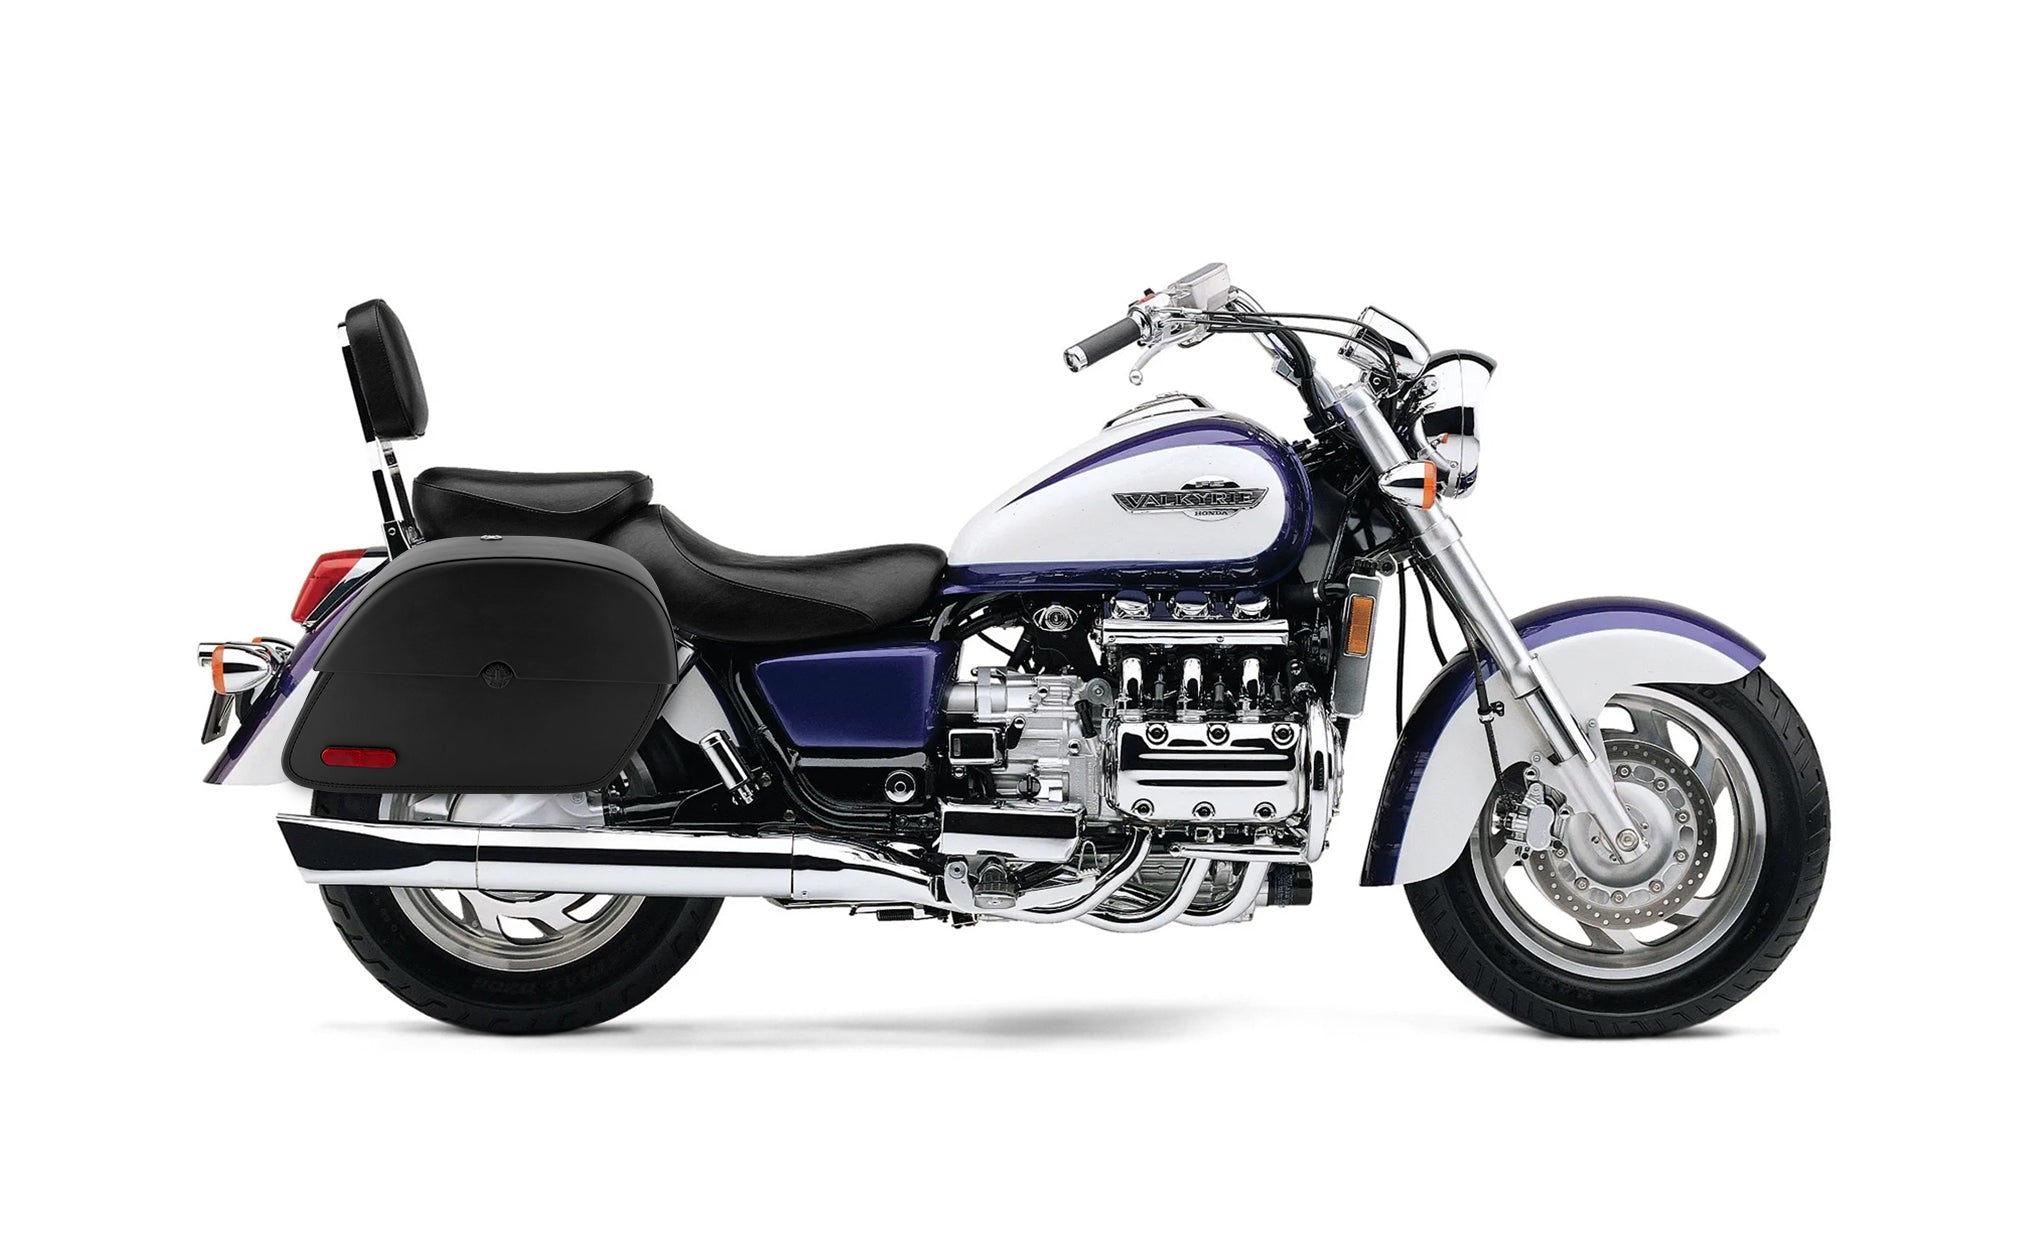 Viking Panzer Large Honda Valkyrie 1500 Interstate Leather Motorcycle Saddlebags on Bike Photo @expand